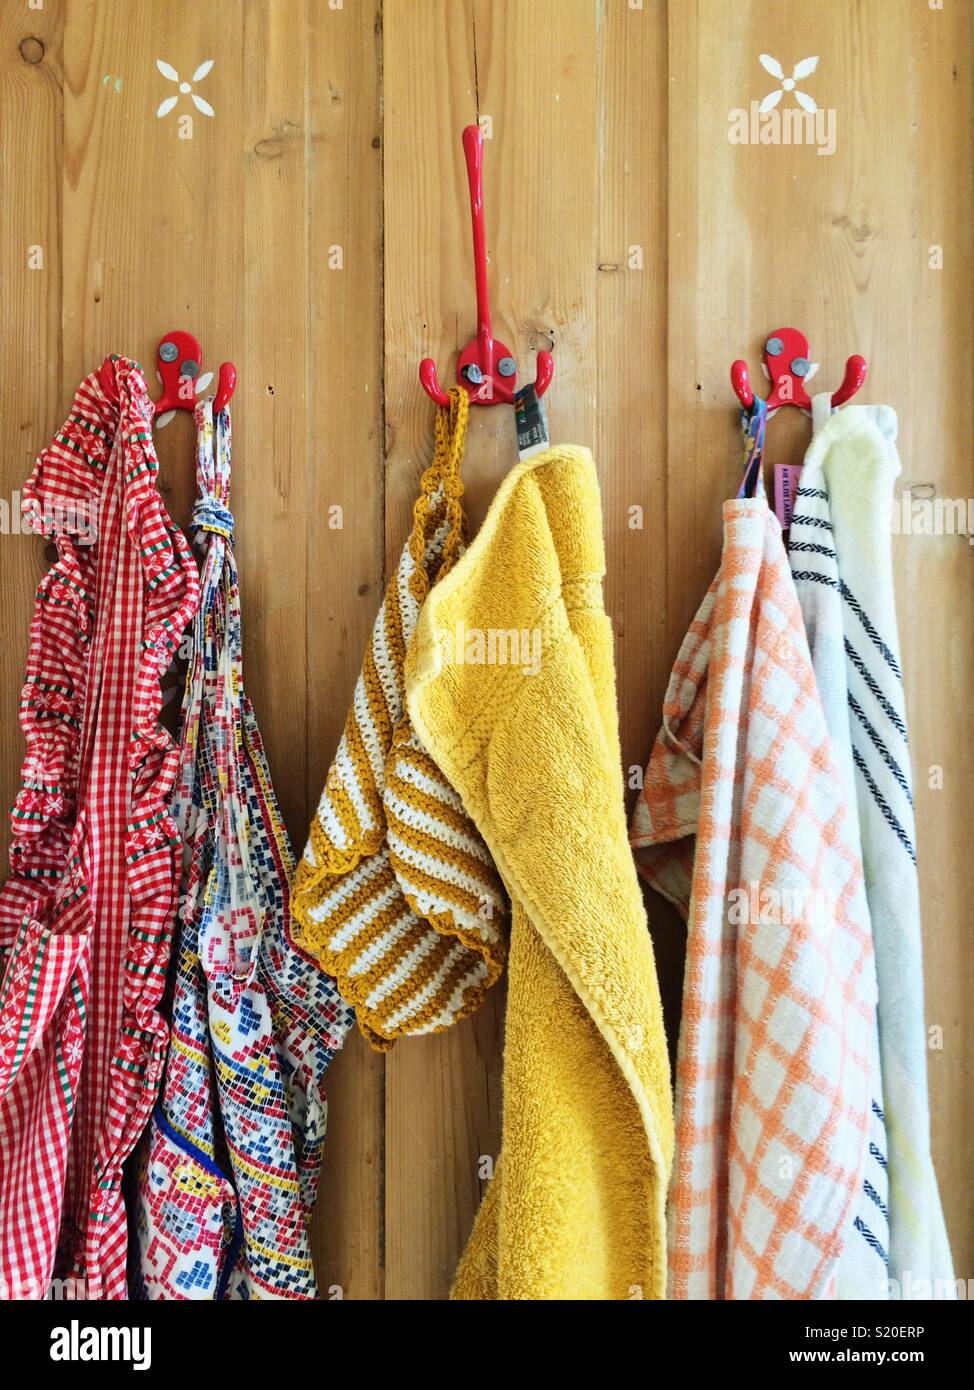 https://c8.alamy.com/comp/S20ERP/aprons-and-tea-towels-hanging-on-back-of-wooden-door-on-red-hooks-S20ERP.jpg